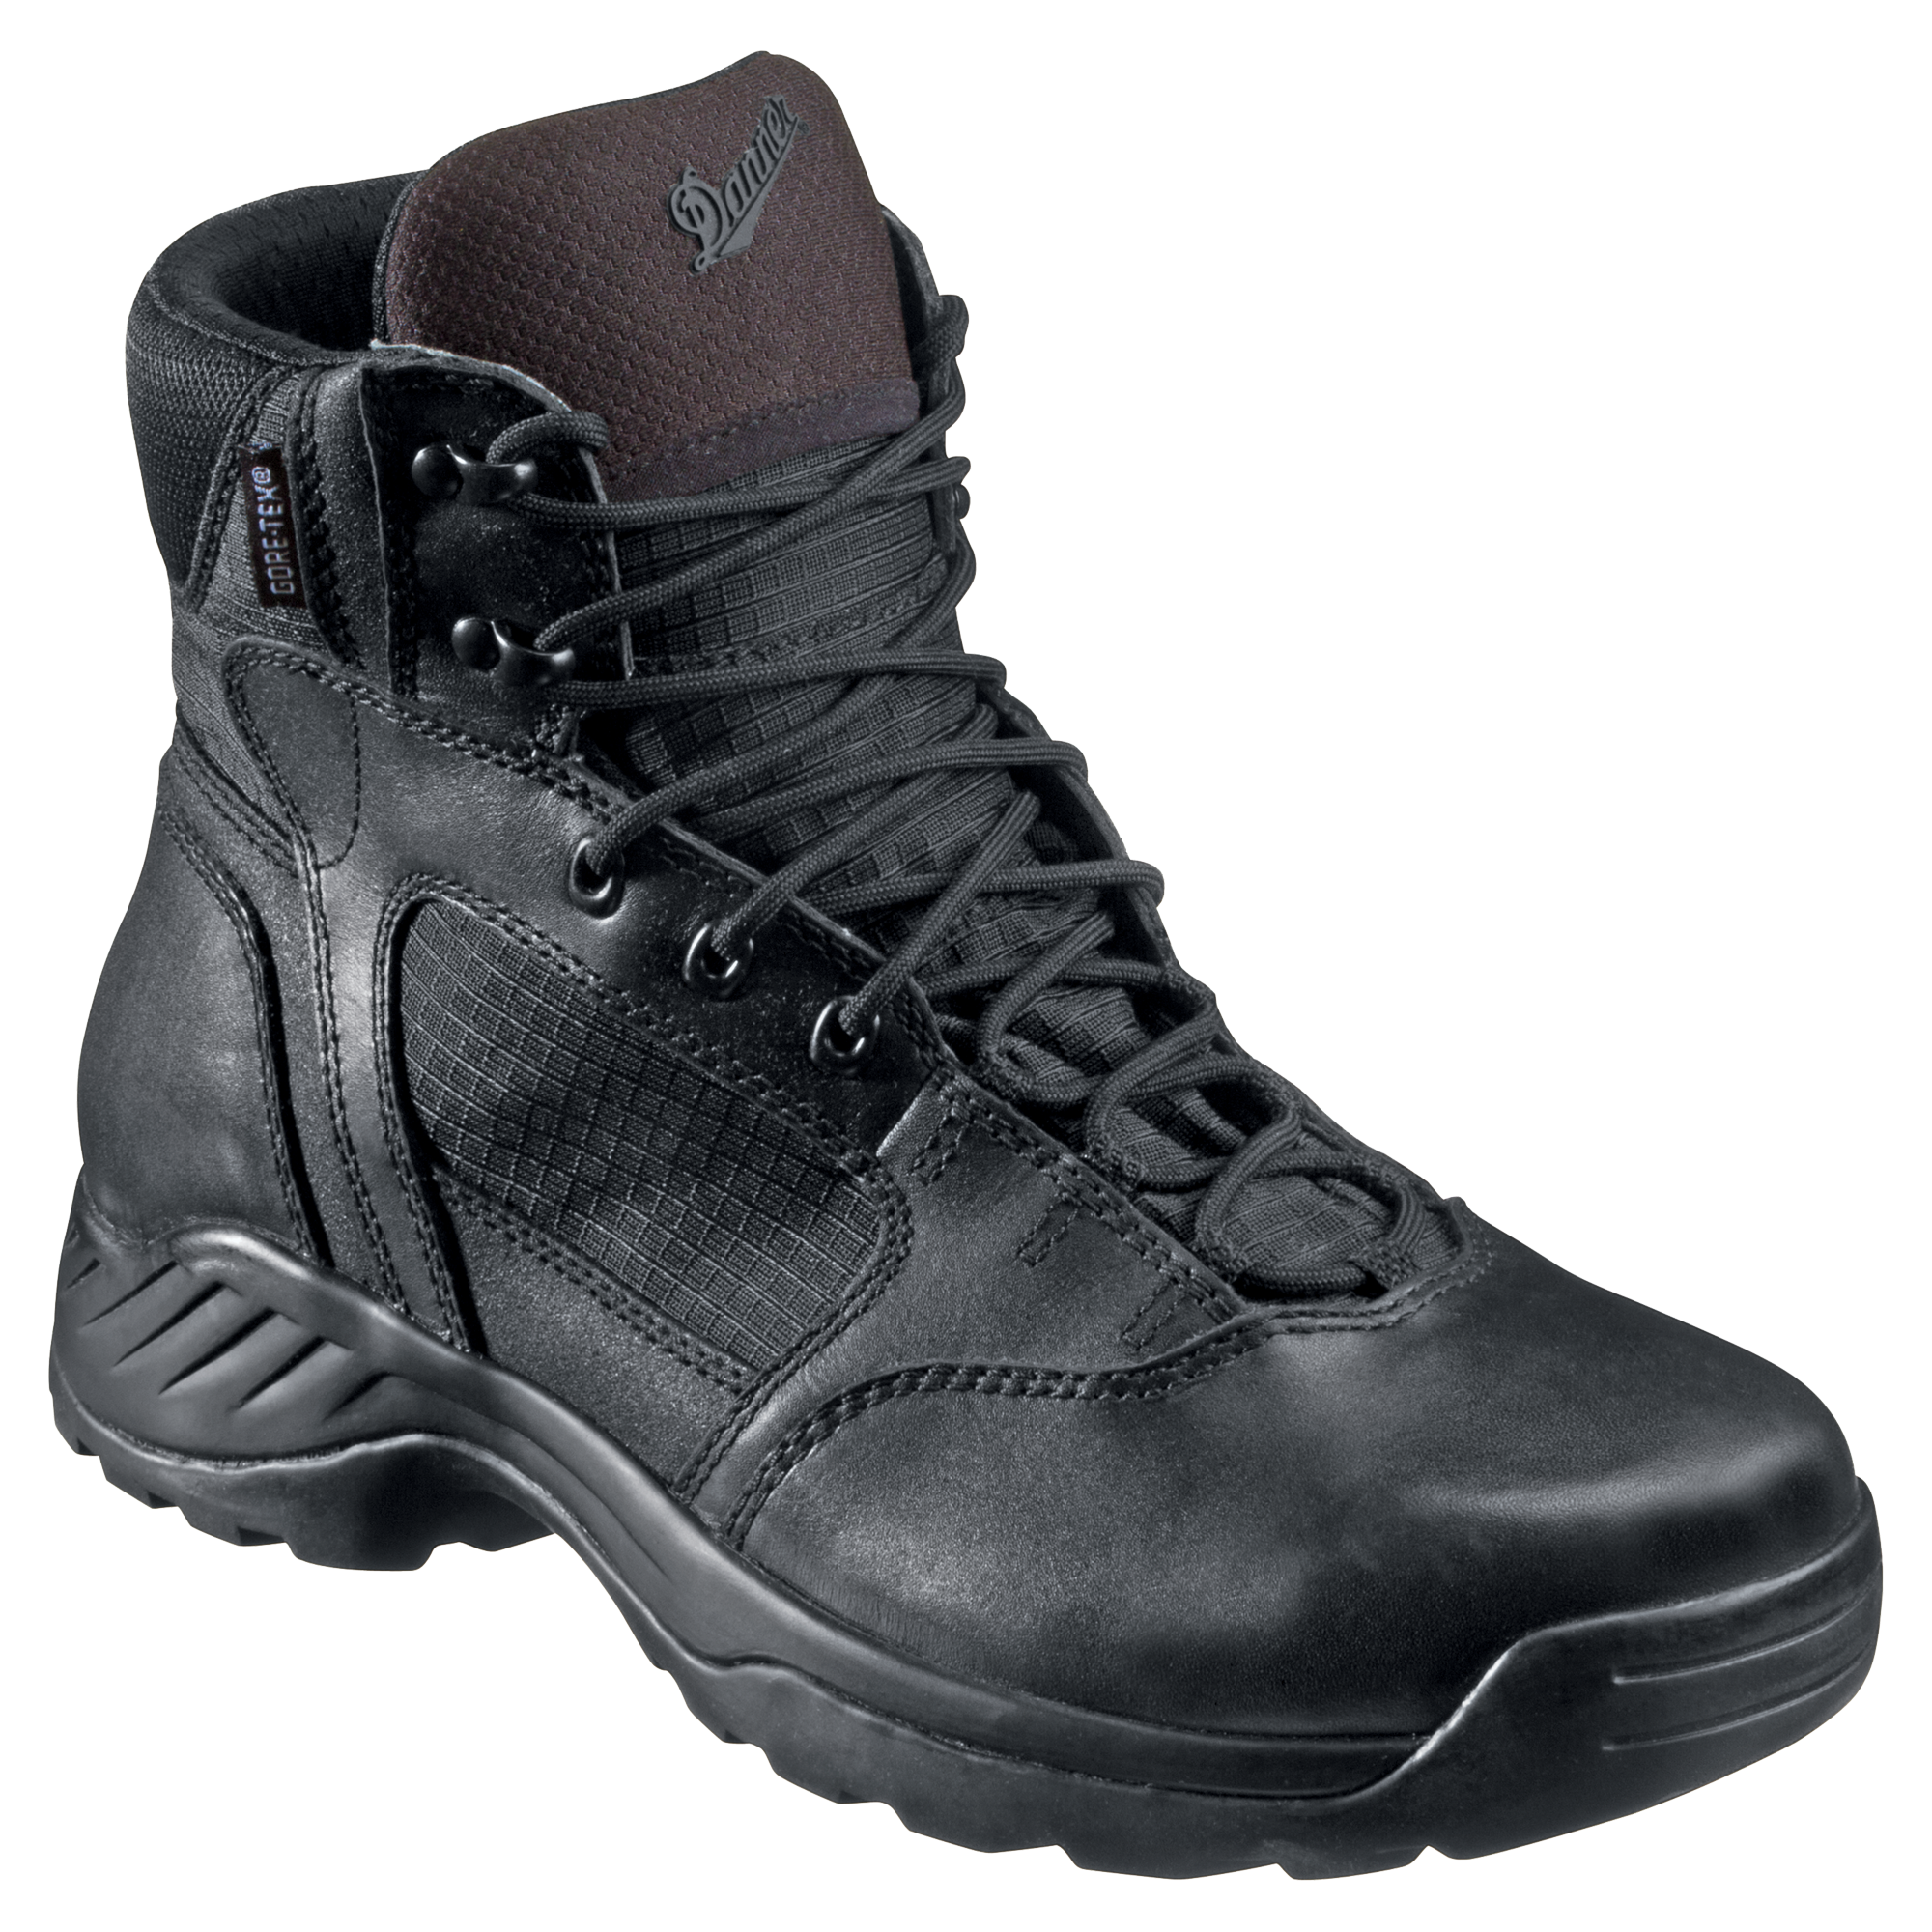 Danner Kinetic Side-Zip GORE-TEX Work Boots for Men - Black - 10W